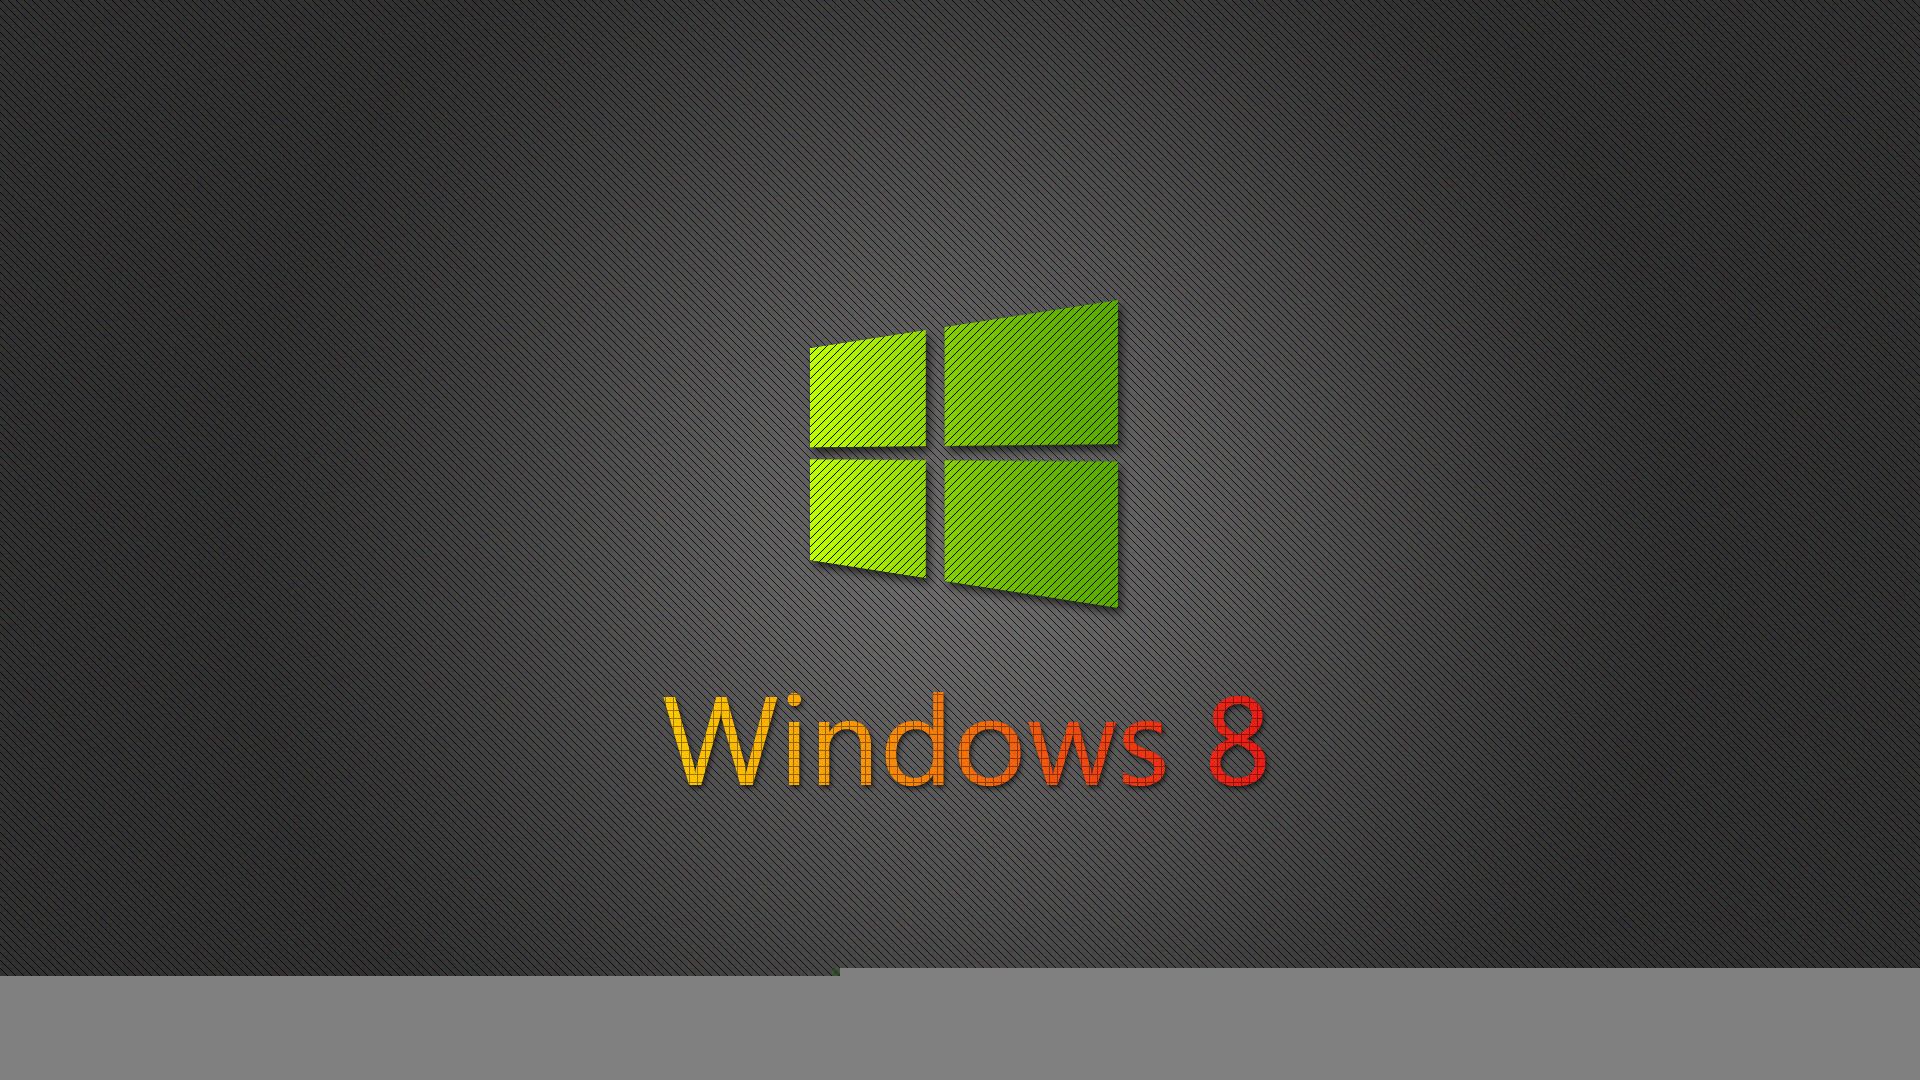 Windows 8 Hd wallpaper 180616